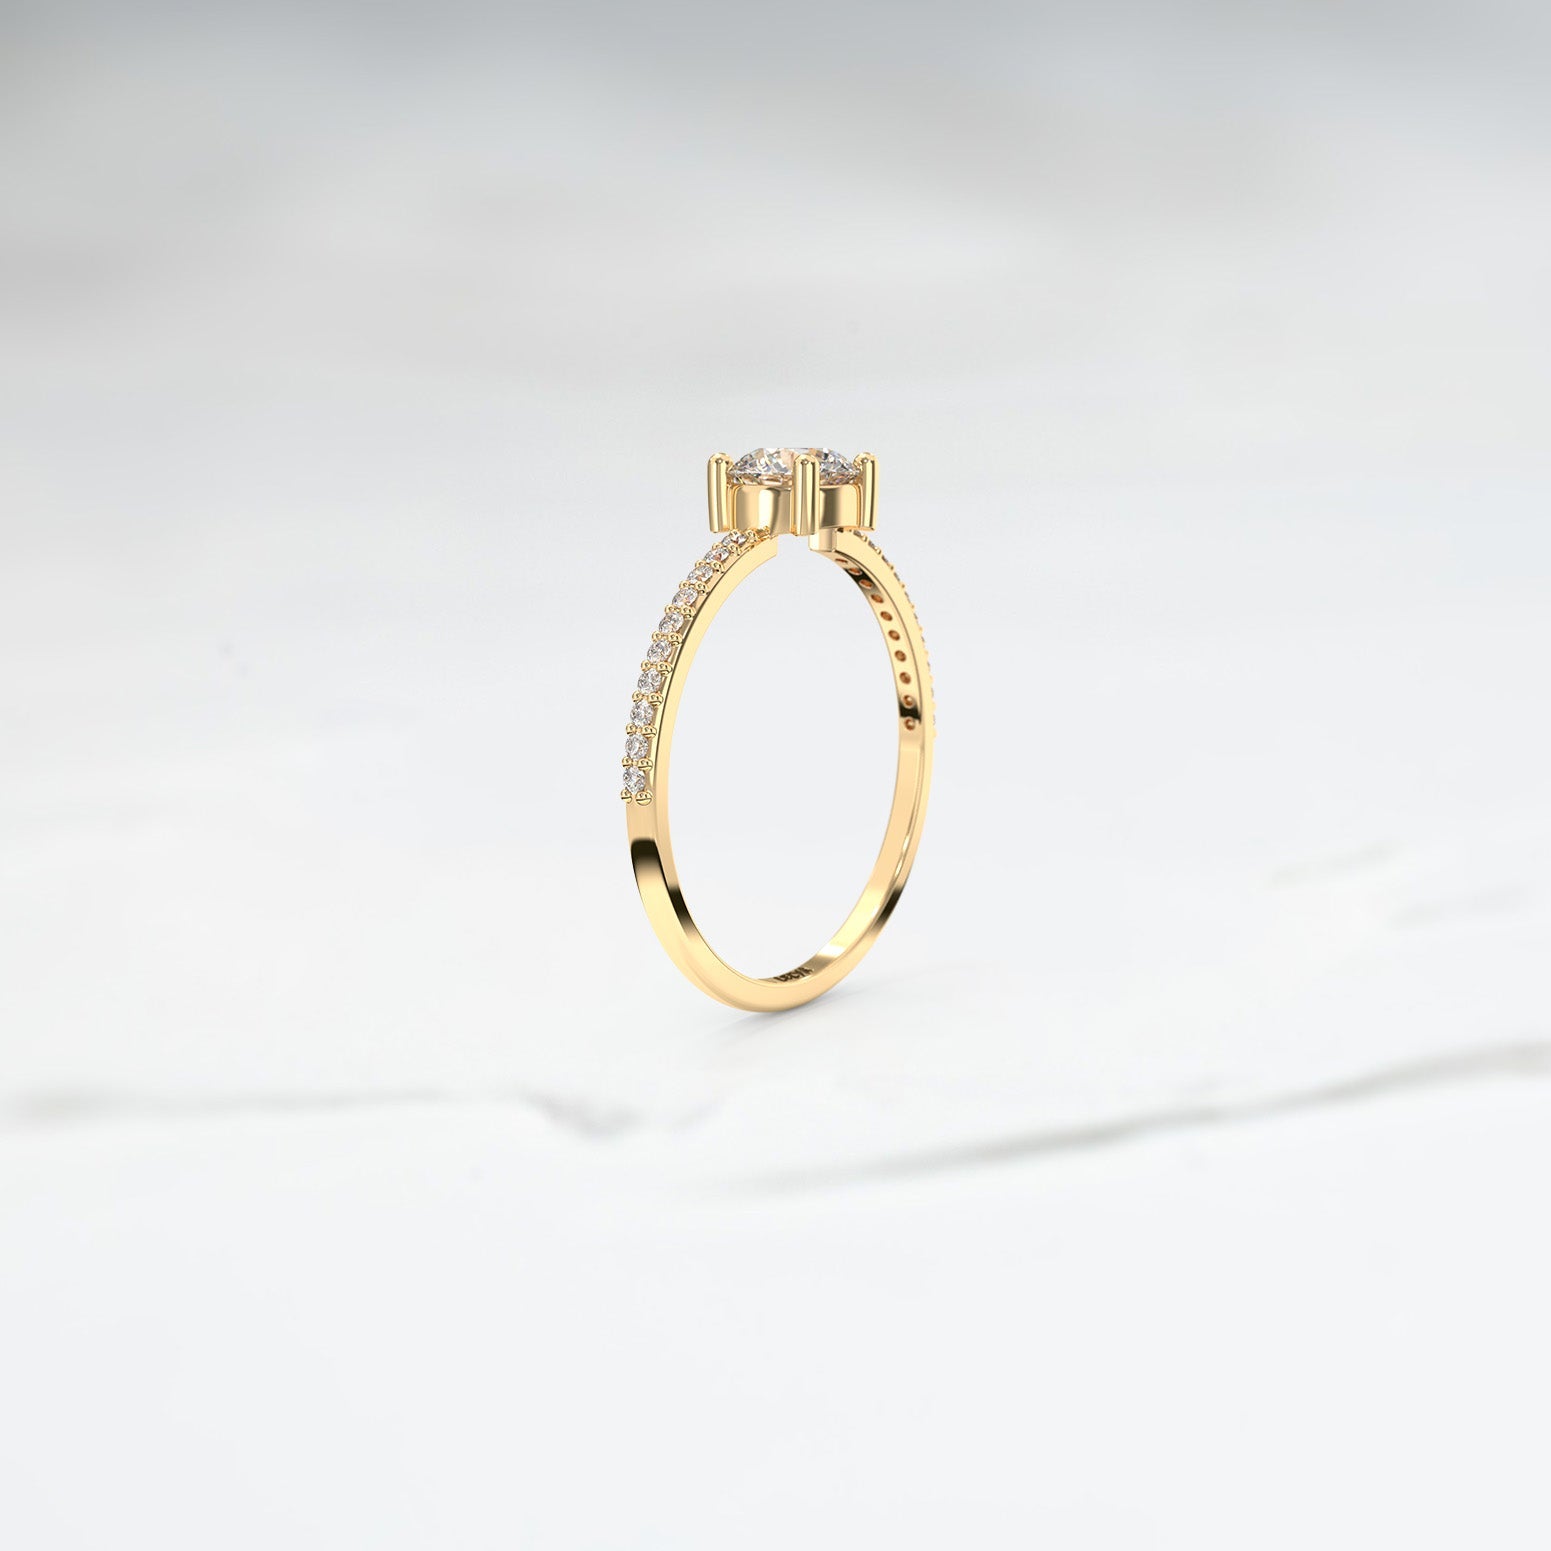 Diamond Halley Frost Ring - Lelya - bespoke engagement and wedding rings made in Scotland, UK